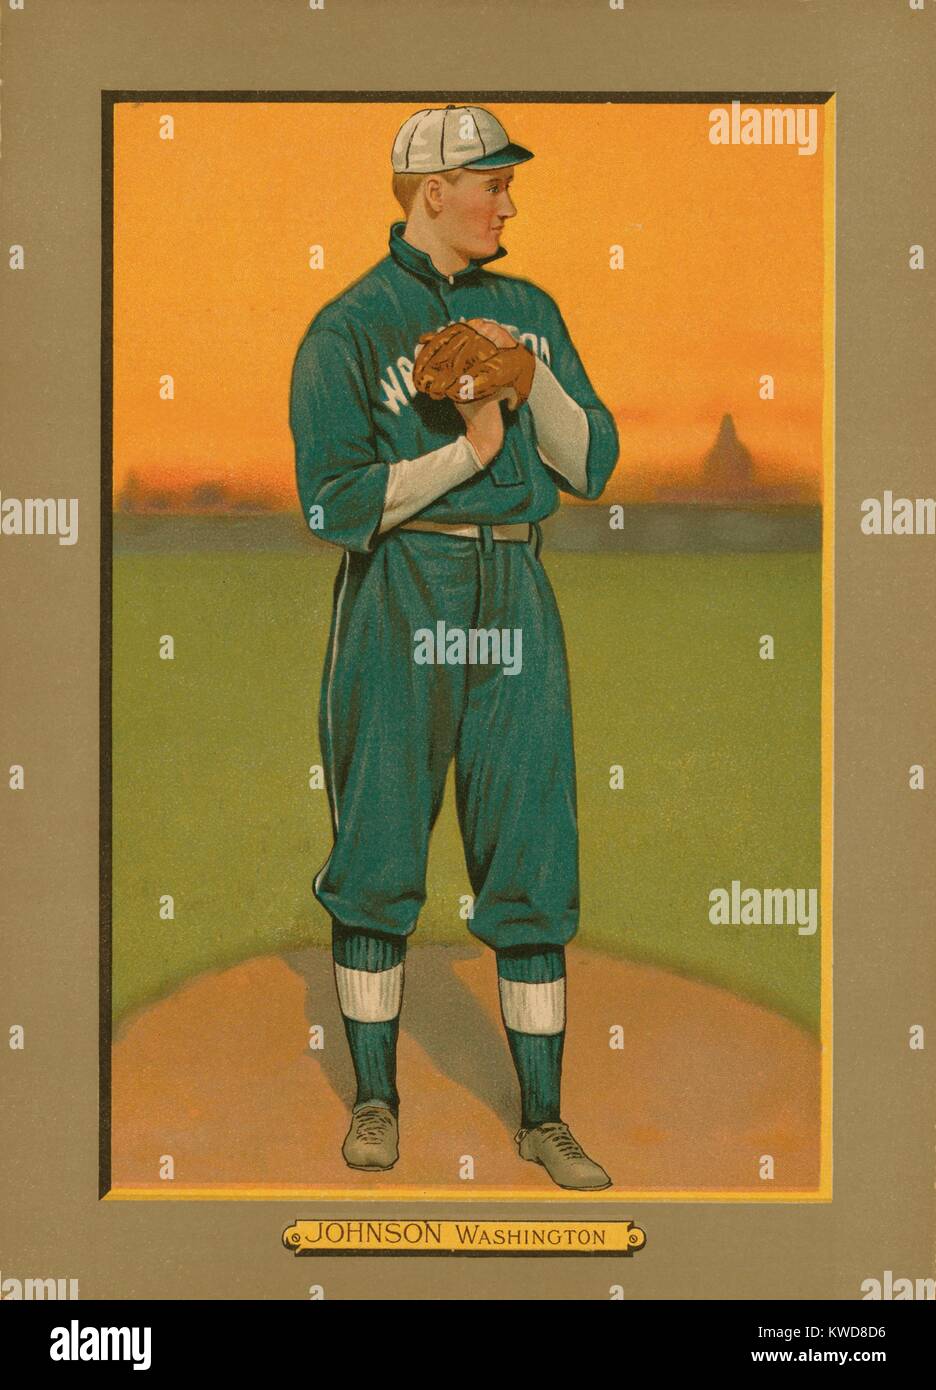 Baseball card of Walter Johnson, Washington Senators, by the American Tobacco Company, 1911. (BSLOC 2015 17 38) Stock Photo